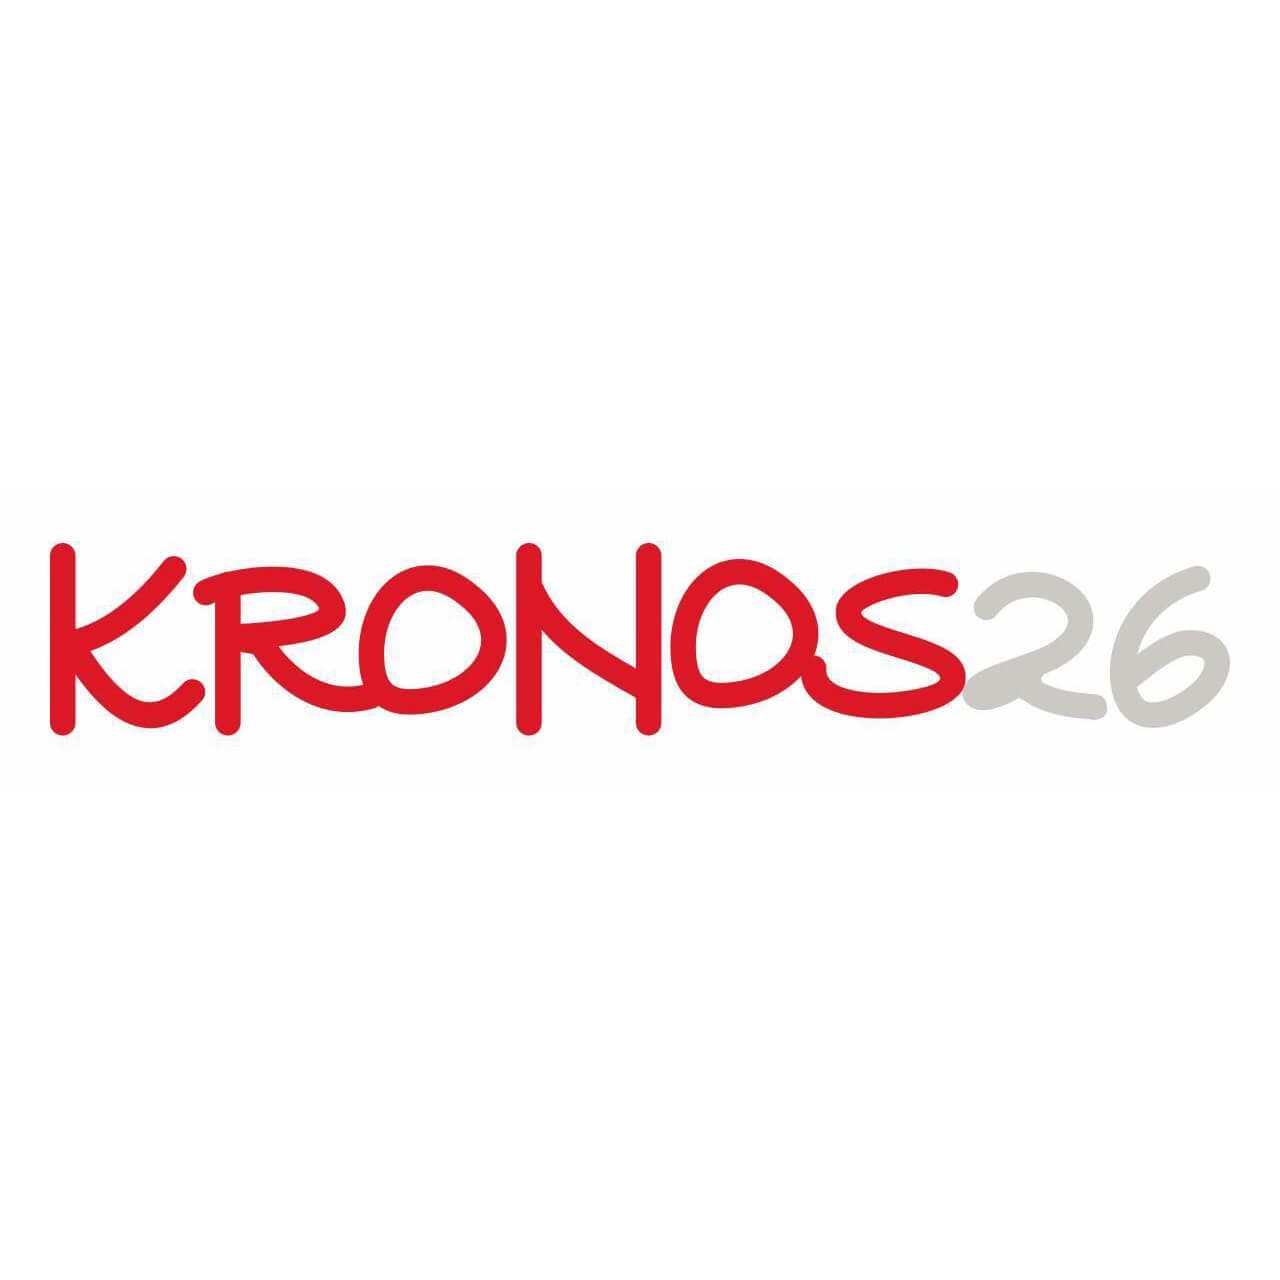 Kronos 26 Logo